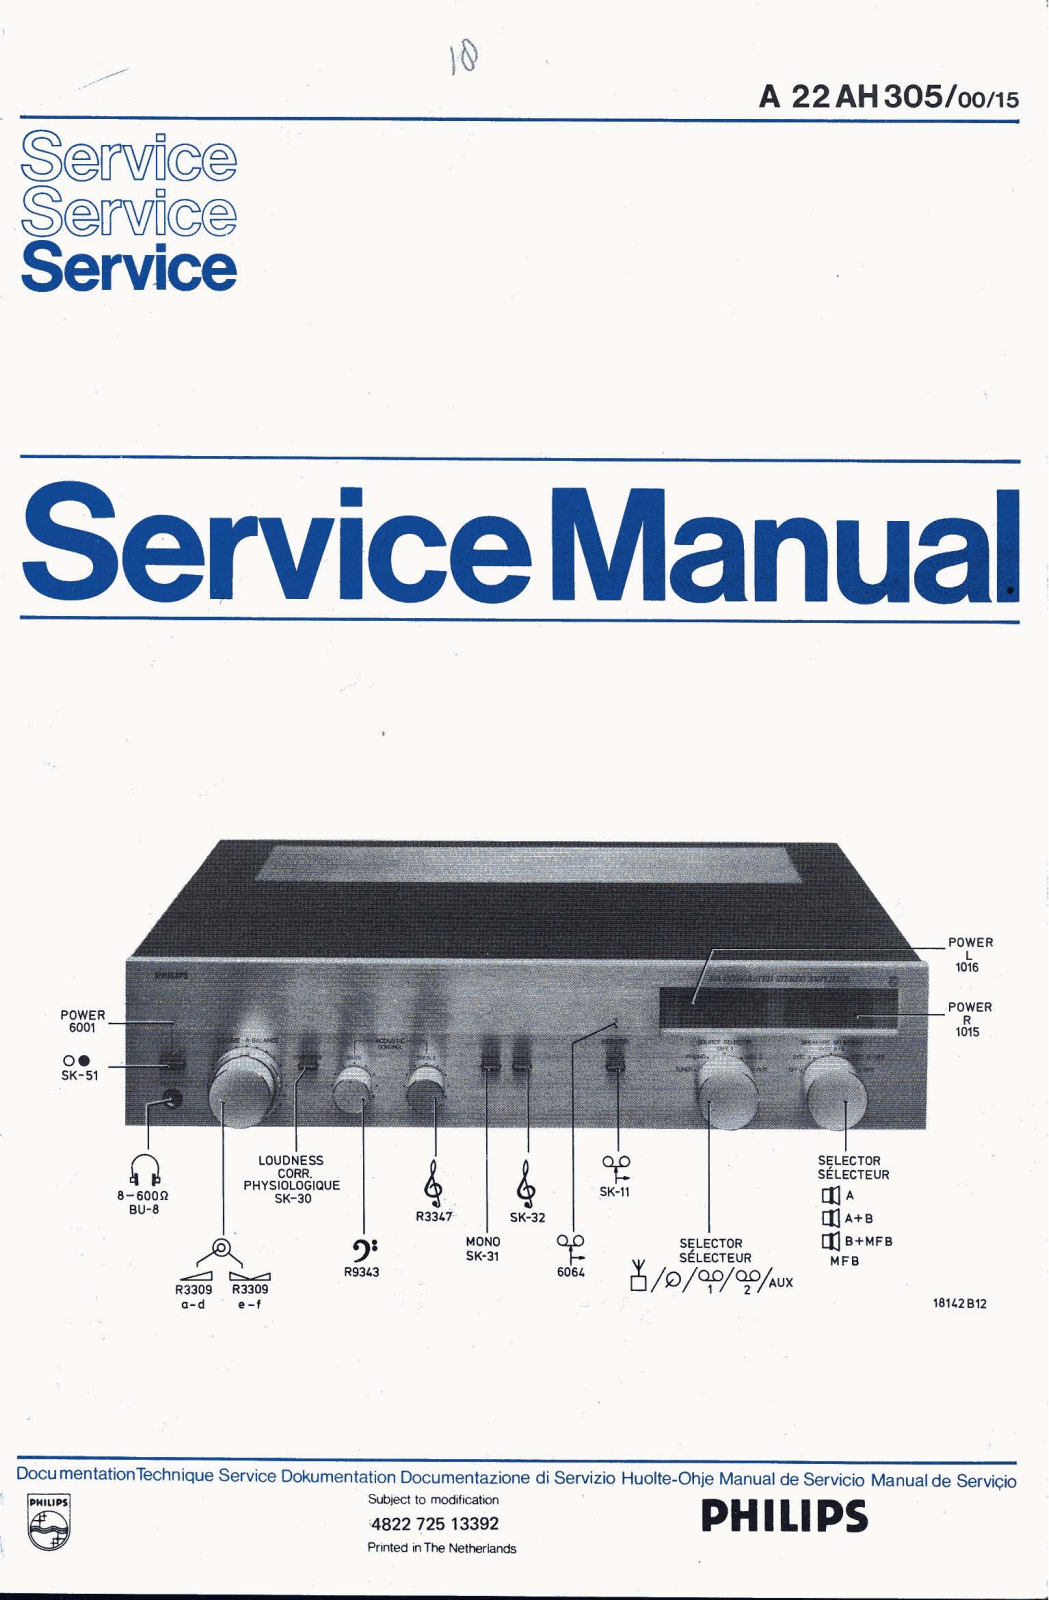 Philips 22-AH-305 Service Manual